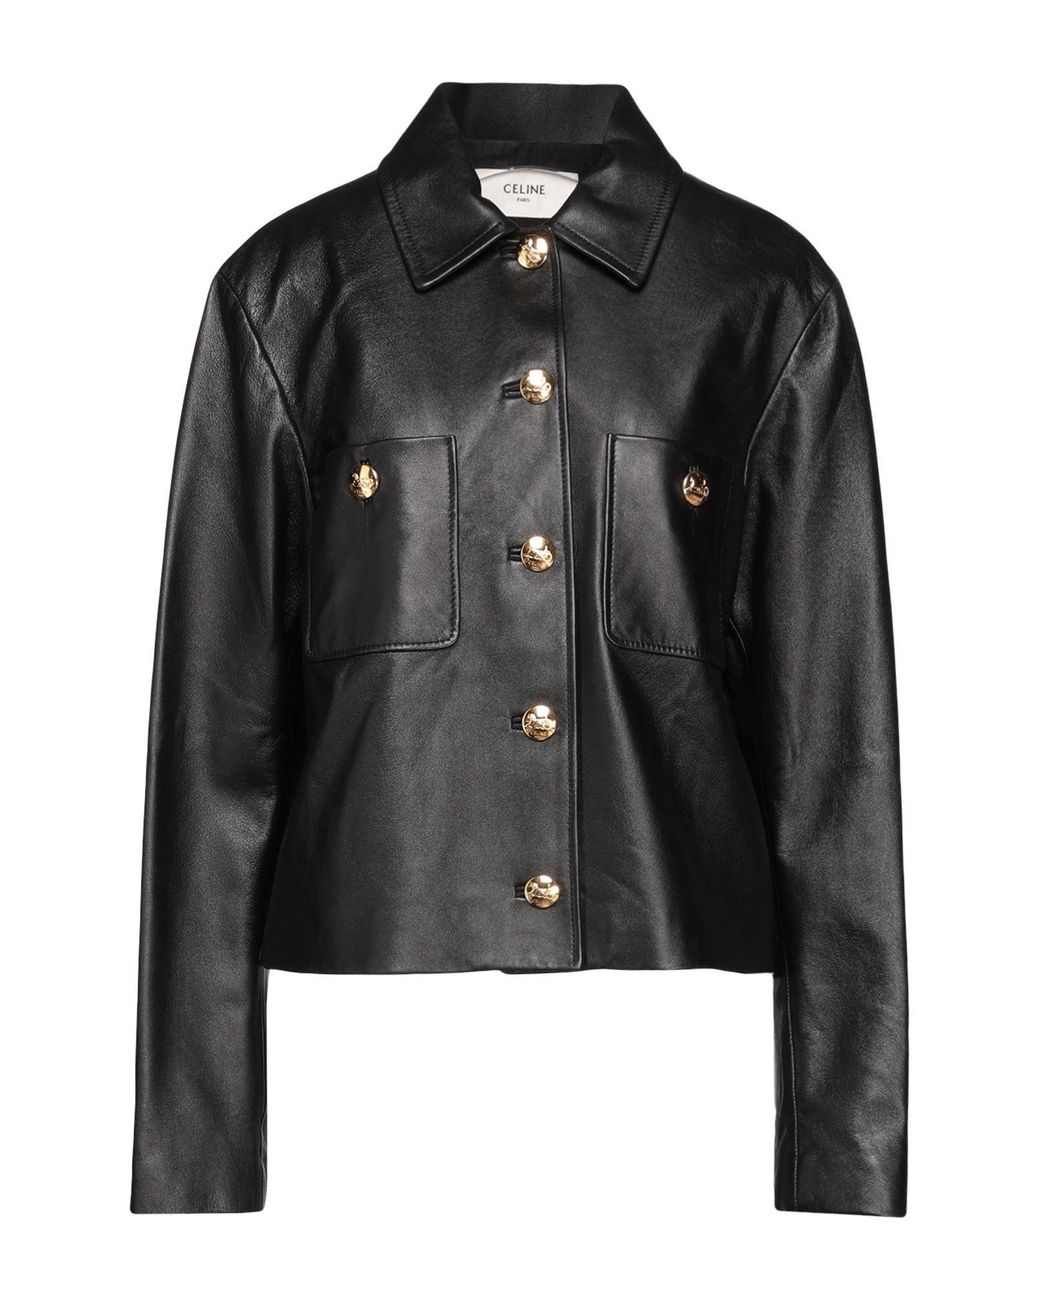 Celine Jacket in Black | Lyst